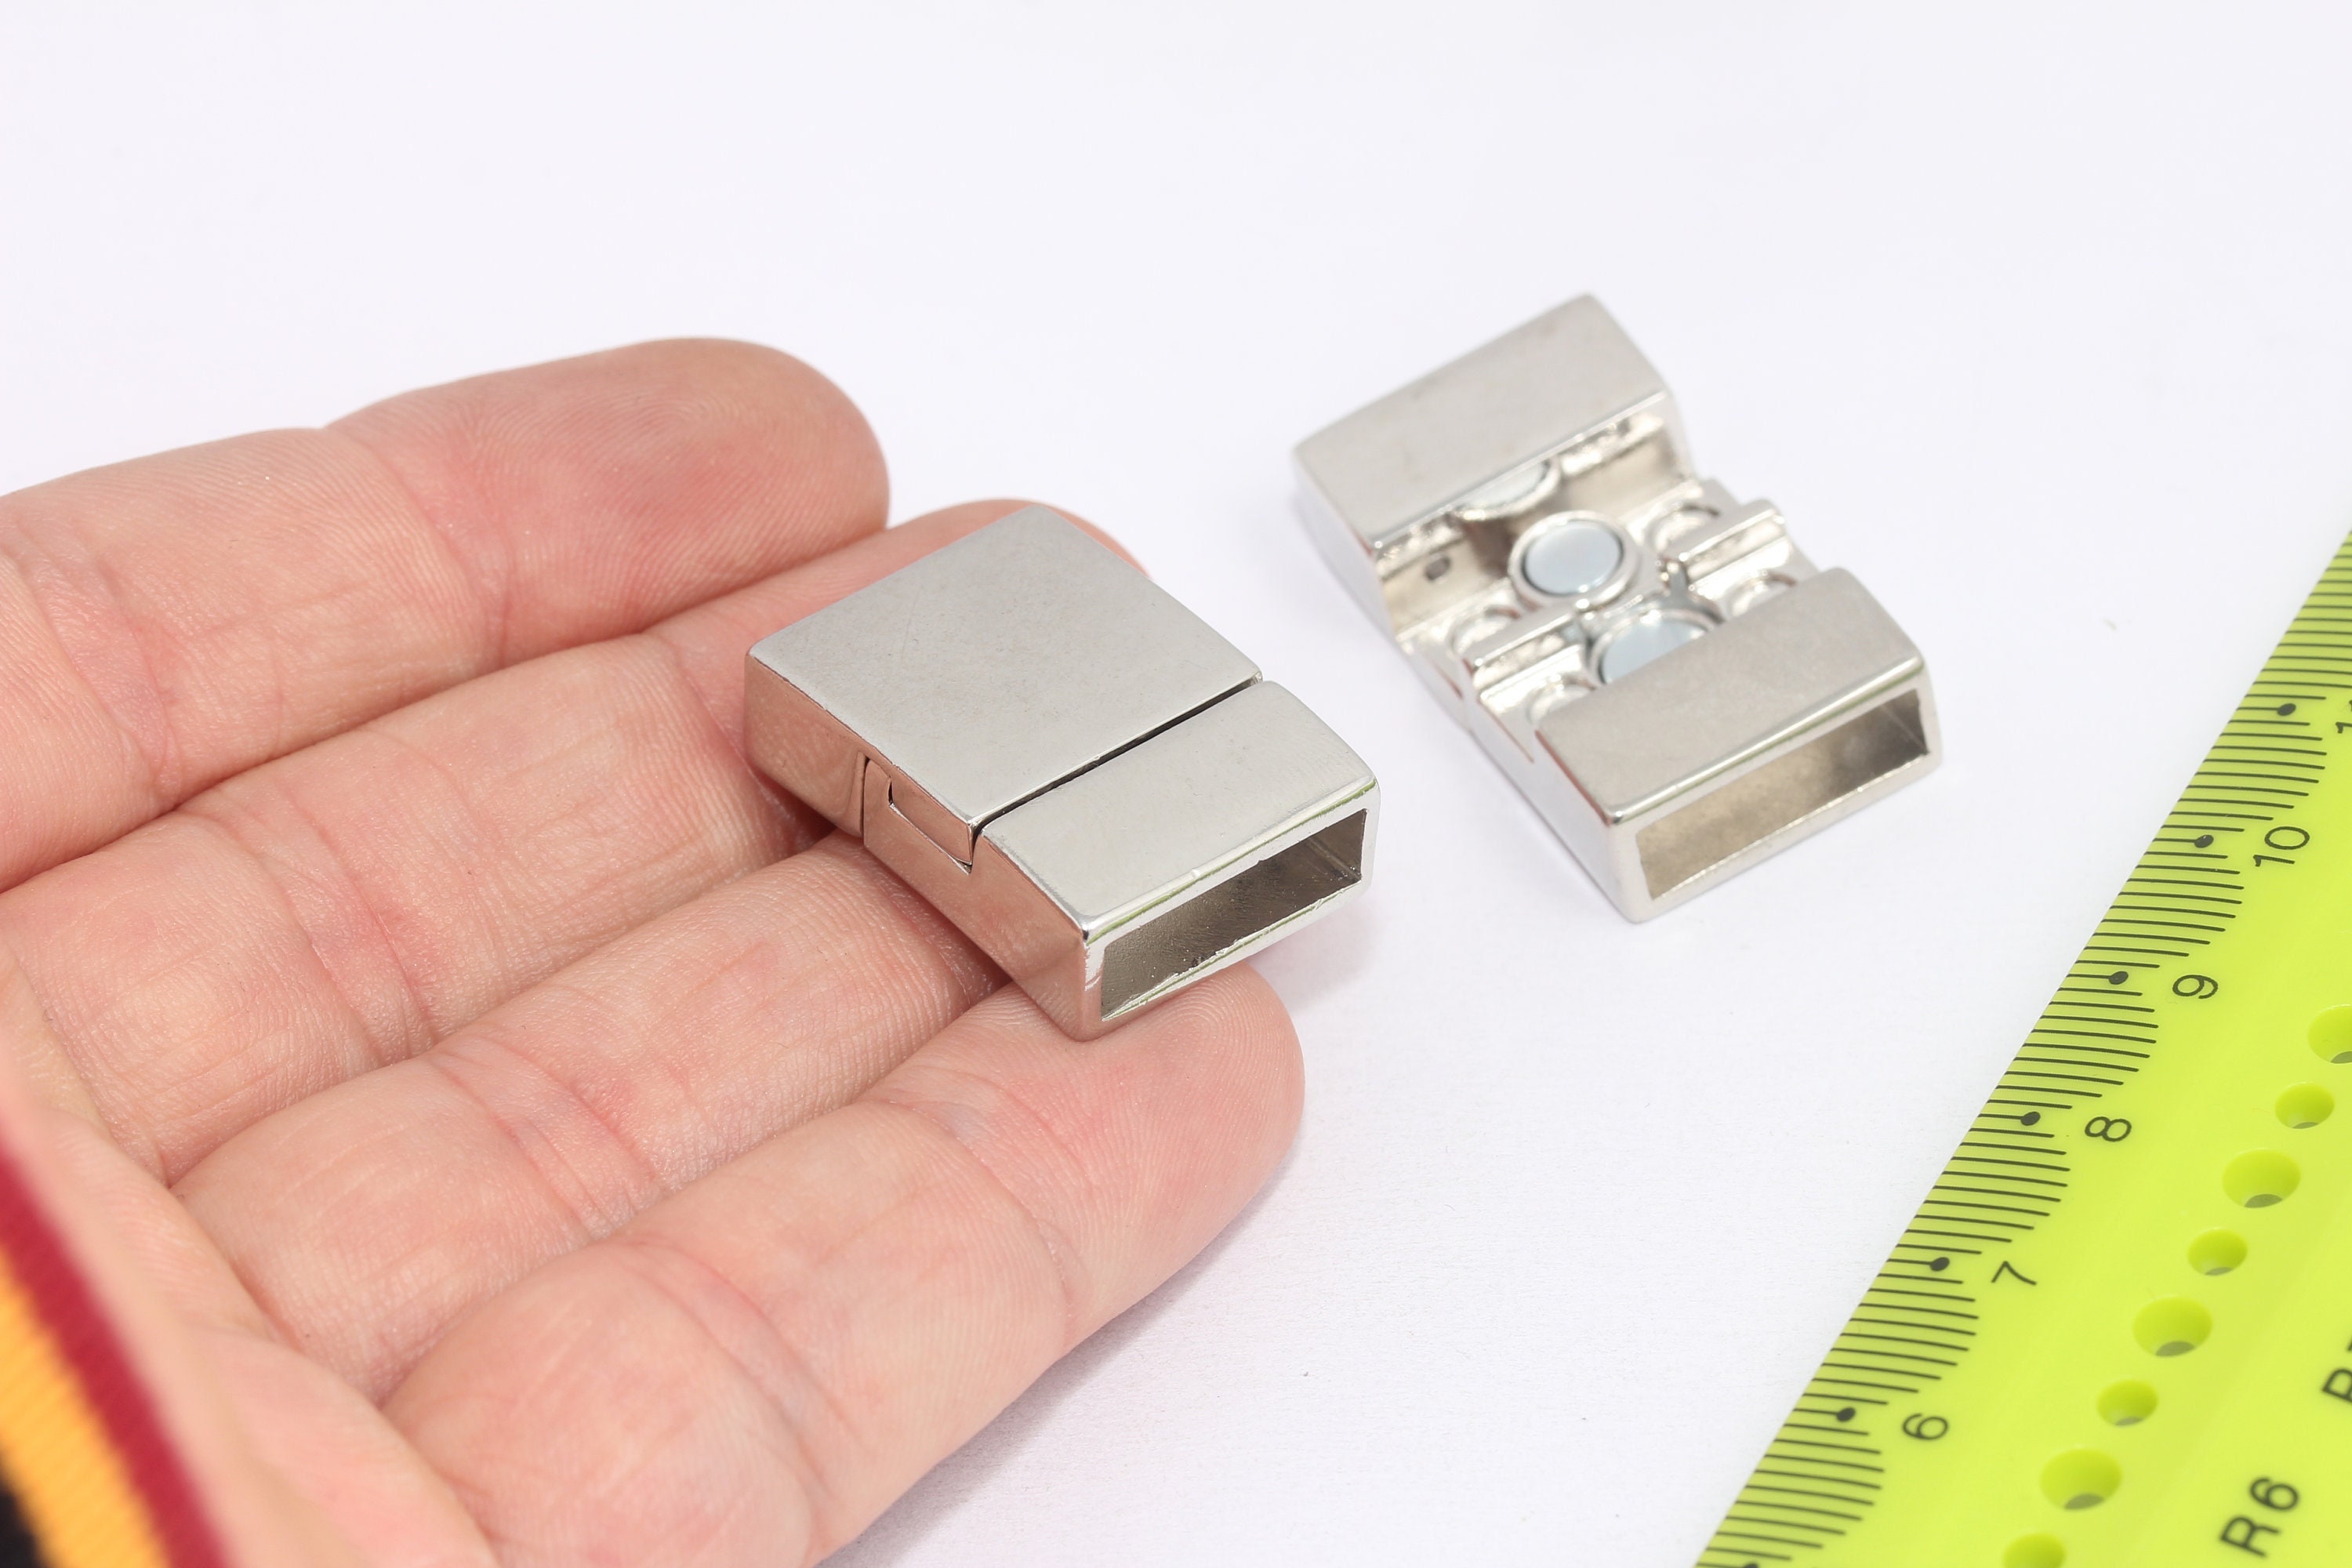 1 Piece Magnetic Clasps for Bracelet Making 8mmx3mm Inner Mechanism Lock  for 8mm Flat Band Bracelet Closure